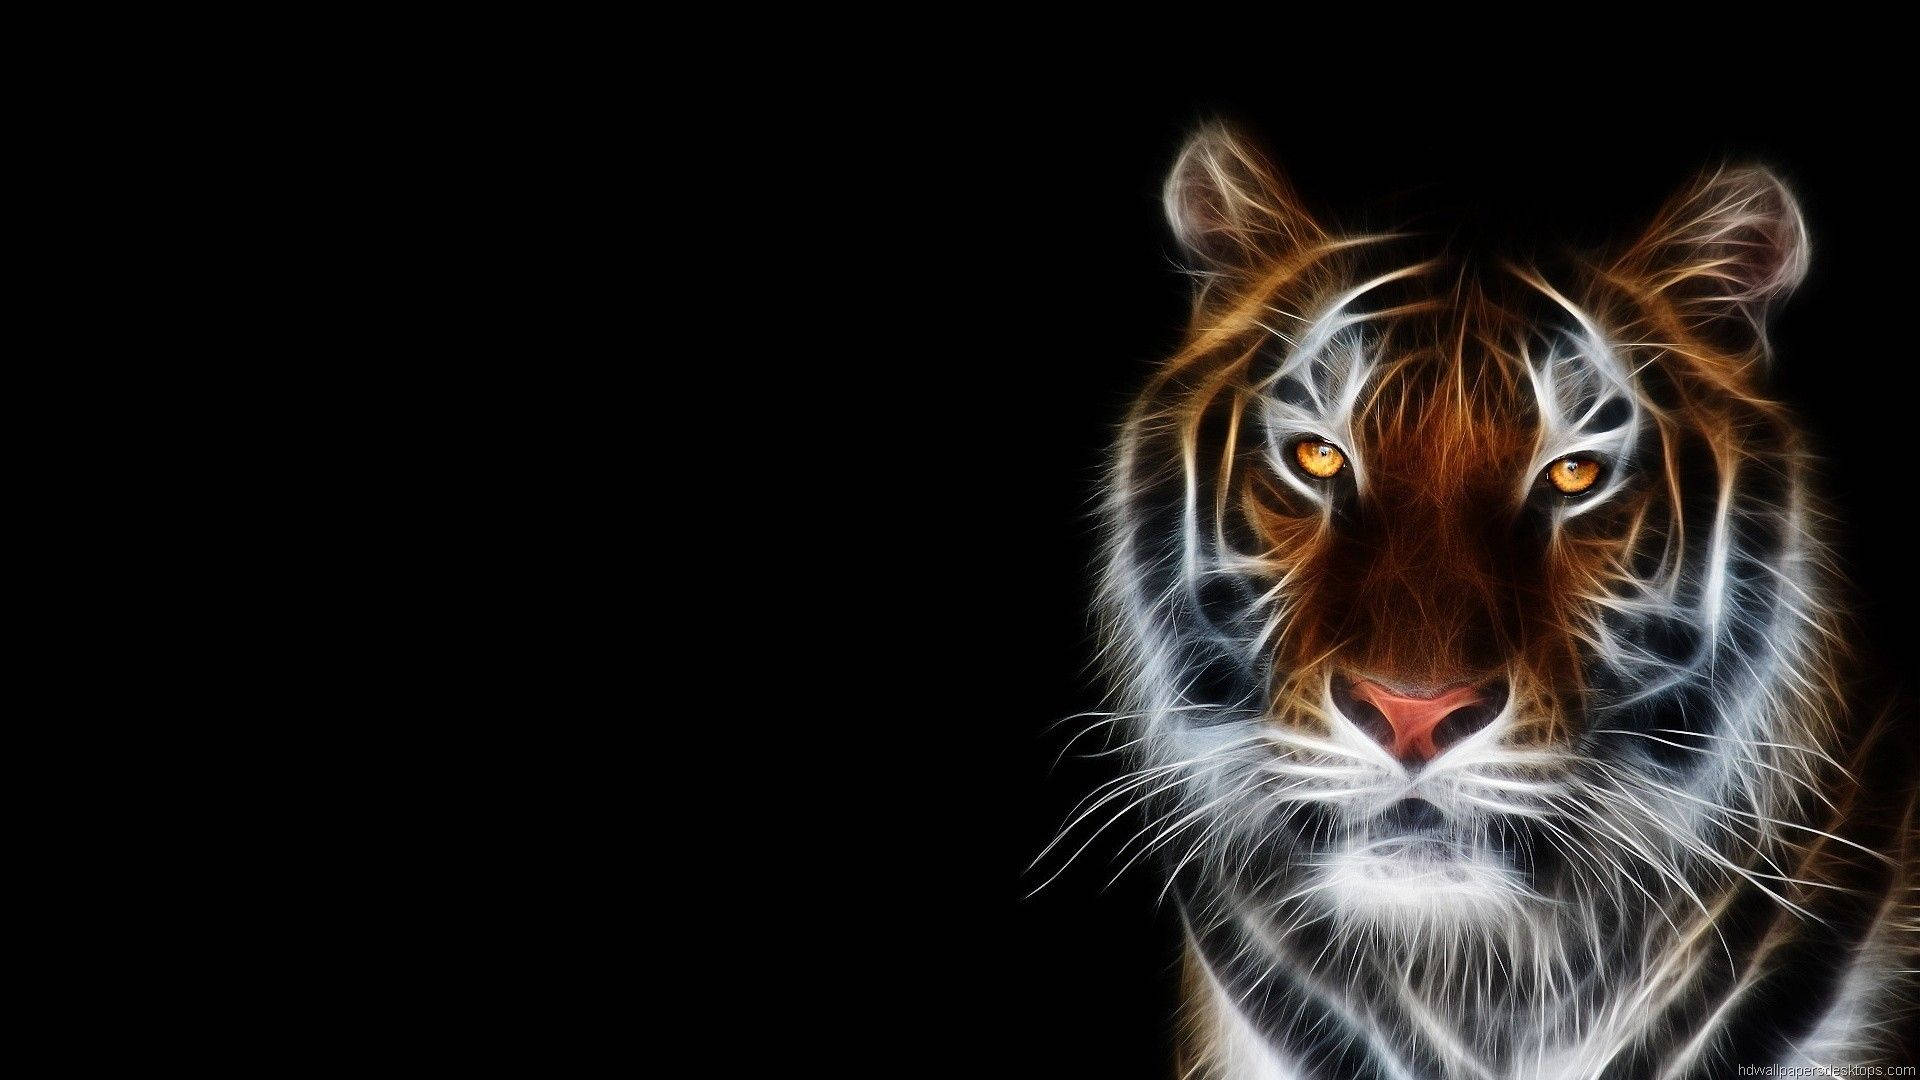 Tiger Animal With Orange Eyes Digital Art Background